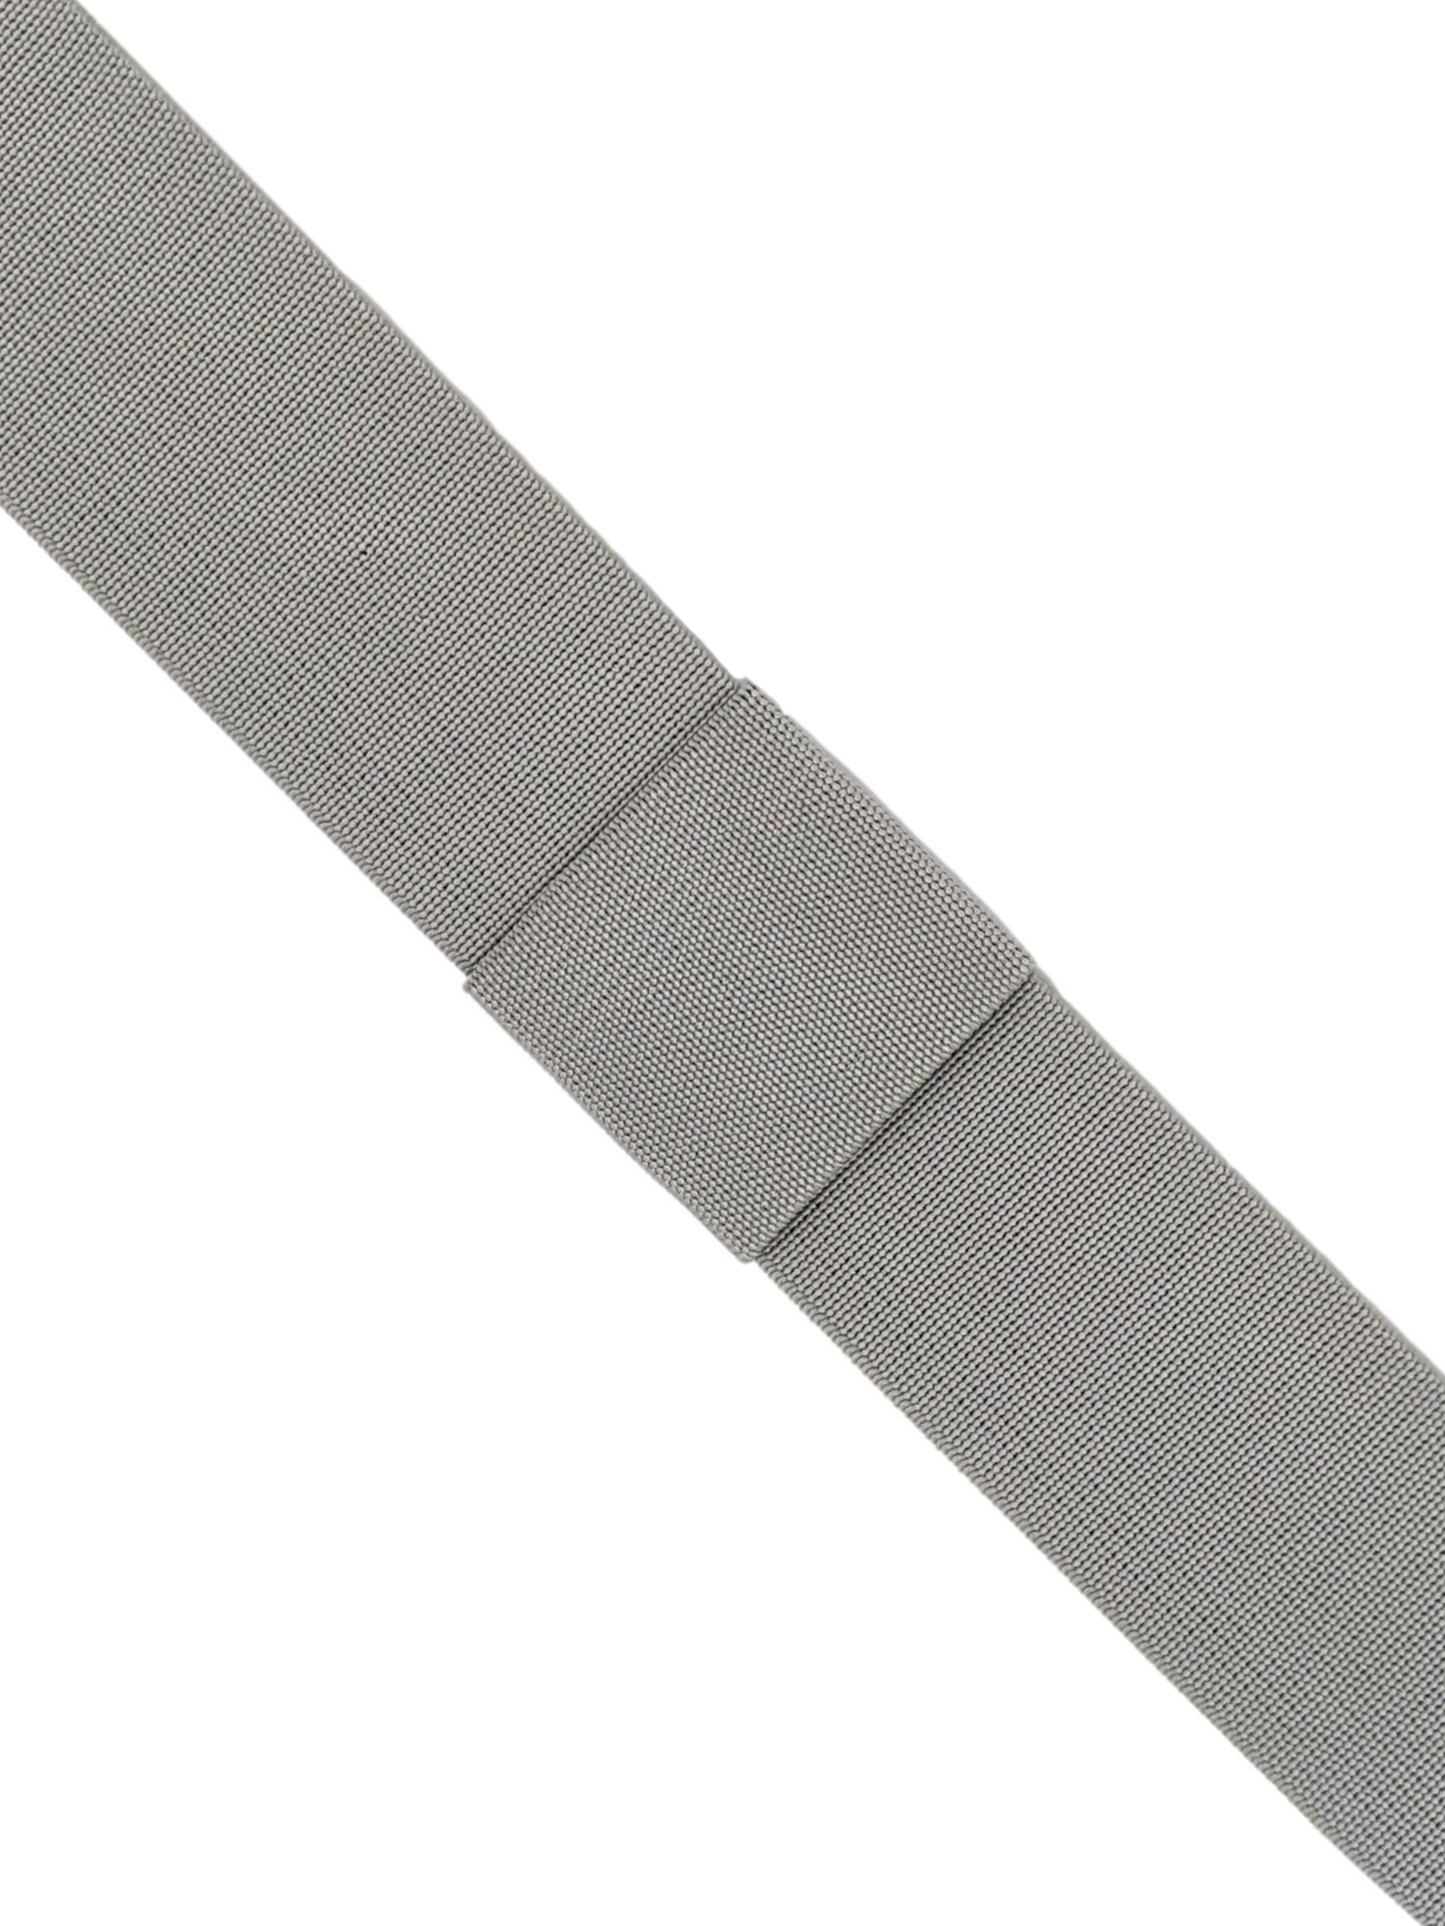 Interchangeable Panama Band - Light Grey